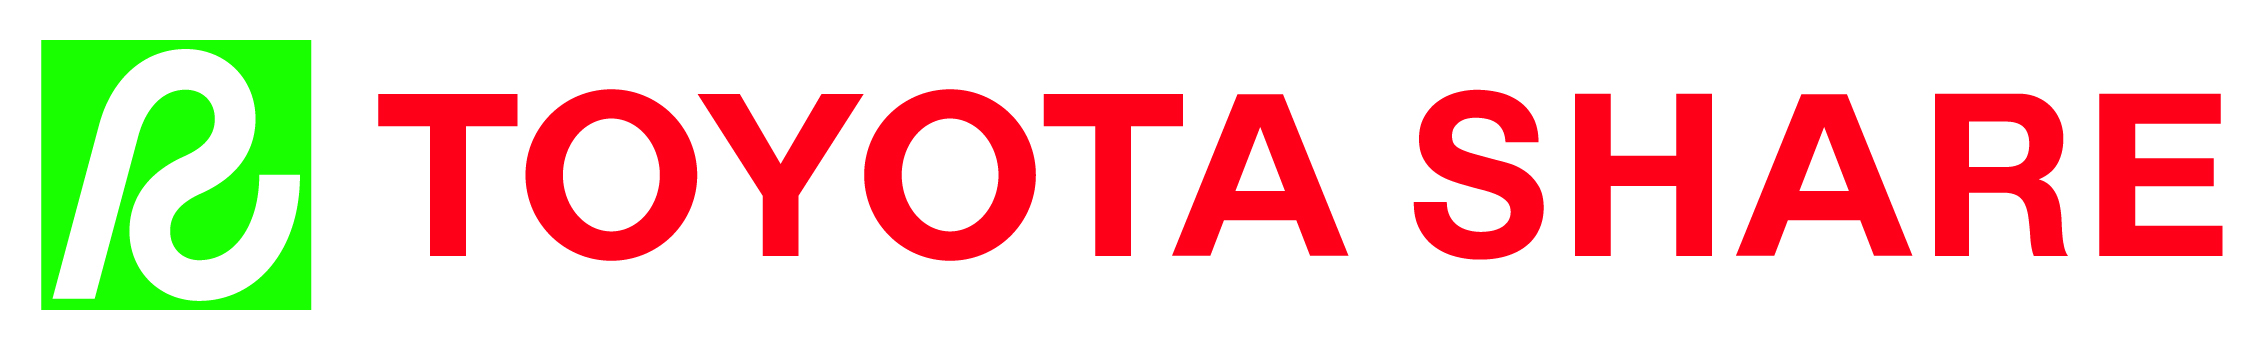 toyotashare_logo